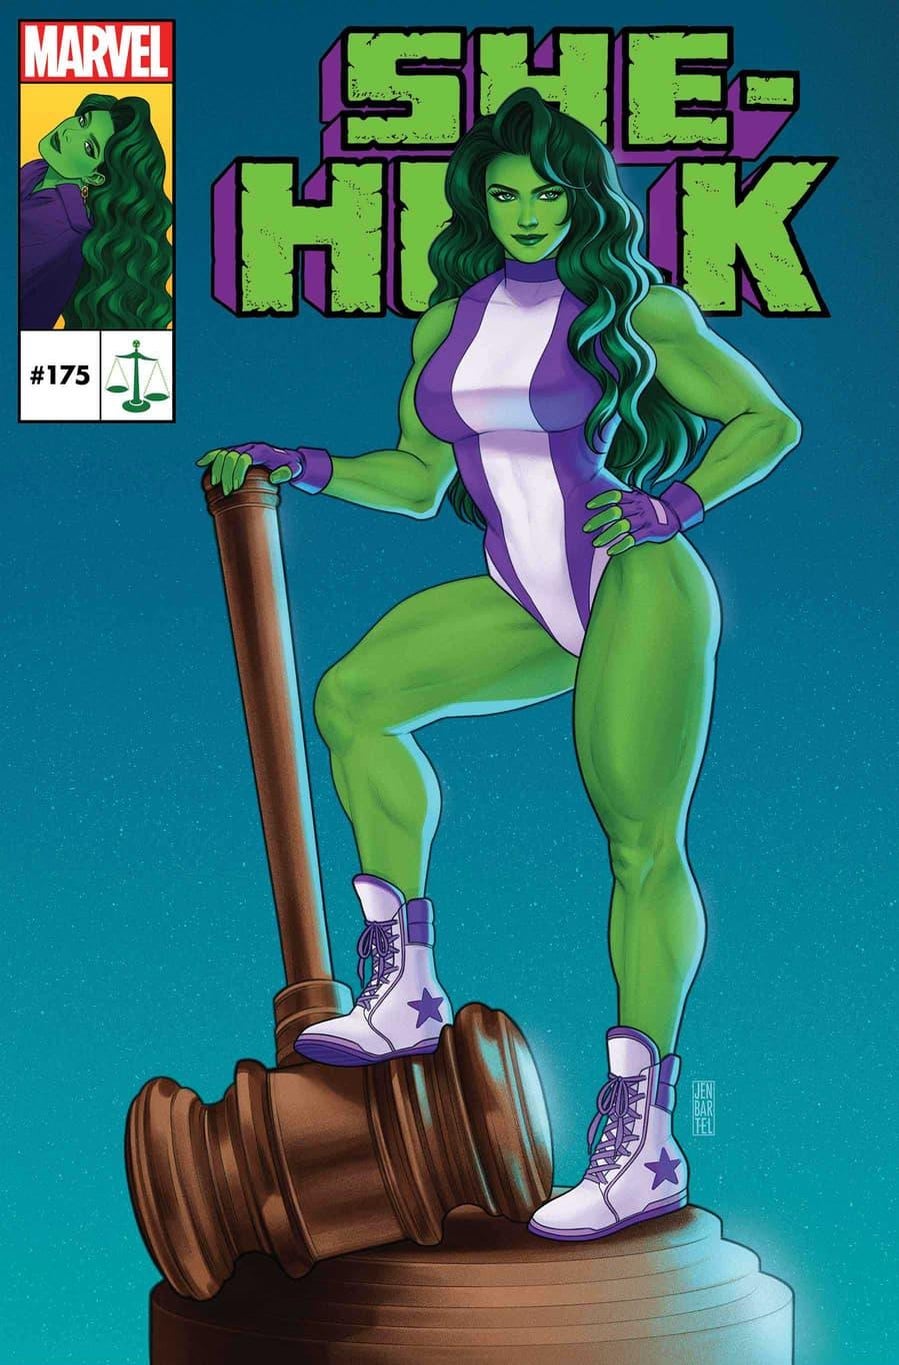 Marvel Announces She-Hulk Anniversary Issue